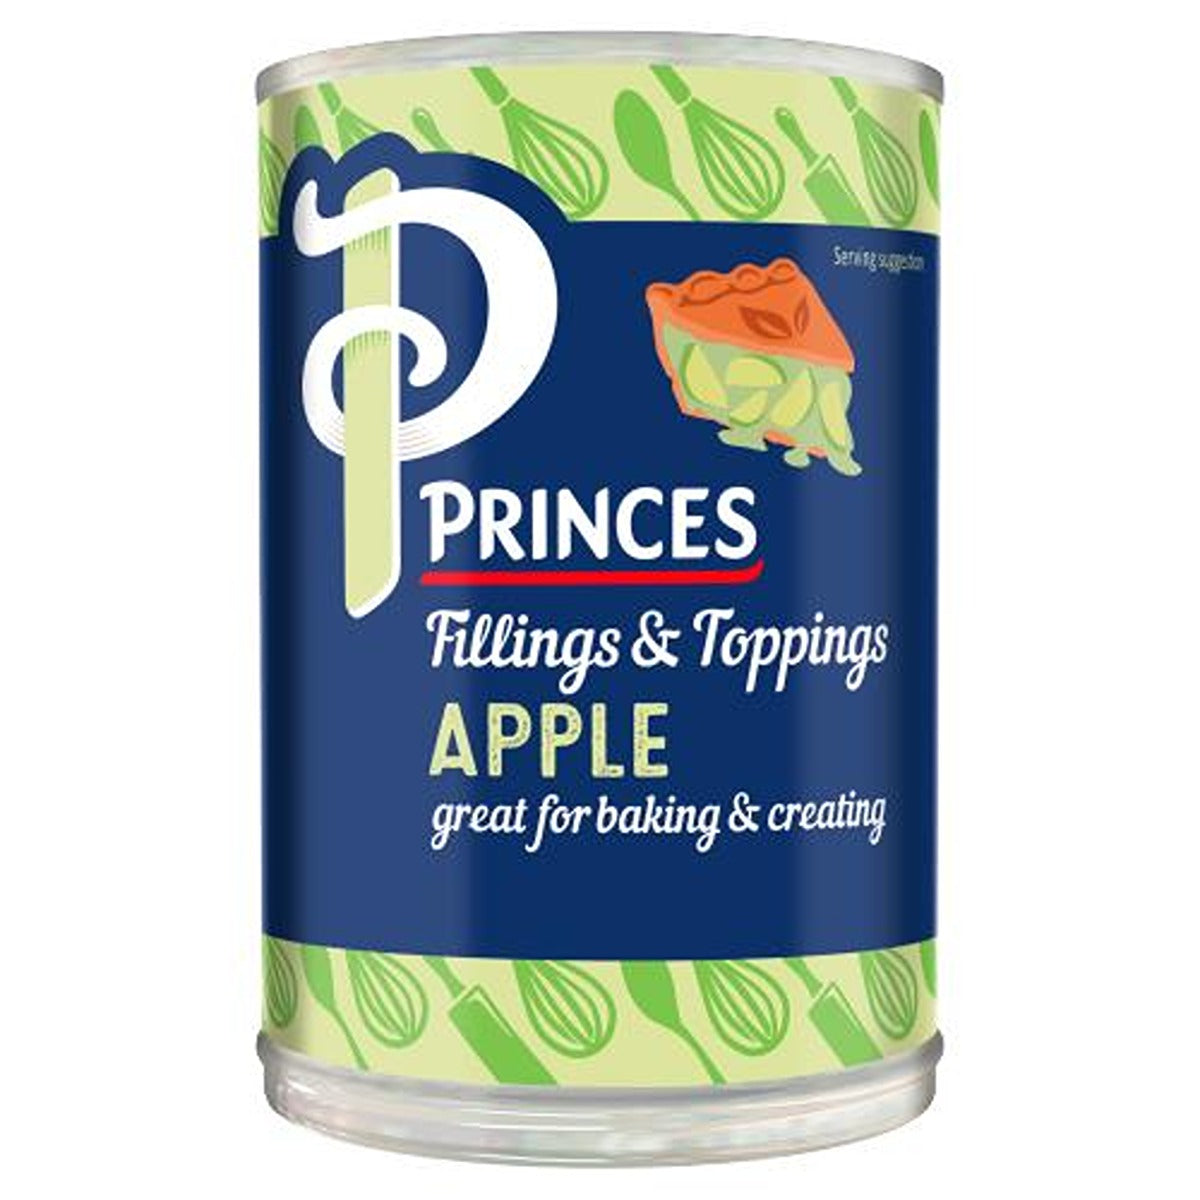 Princes - Apple Fillings & Toppings - 395g.